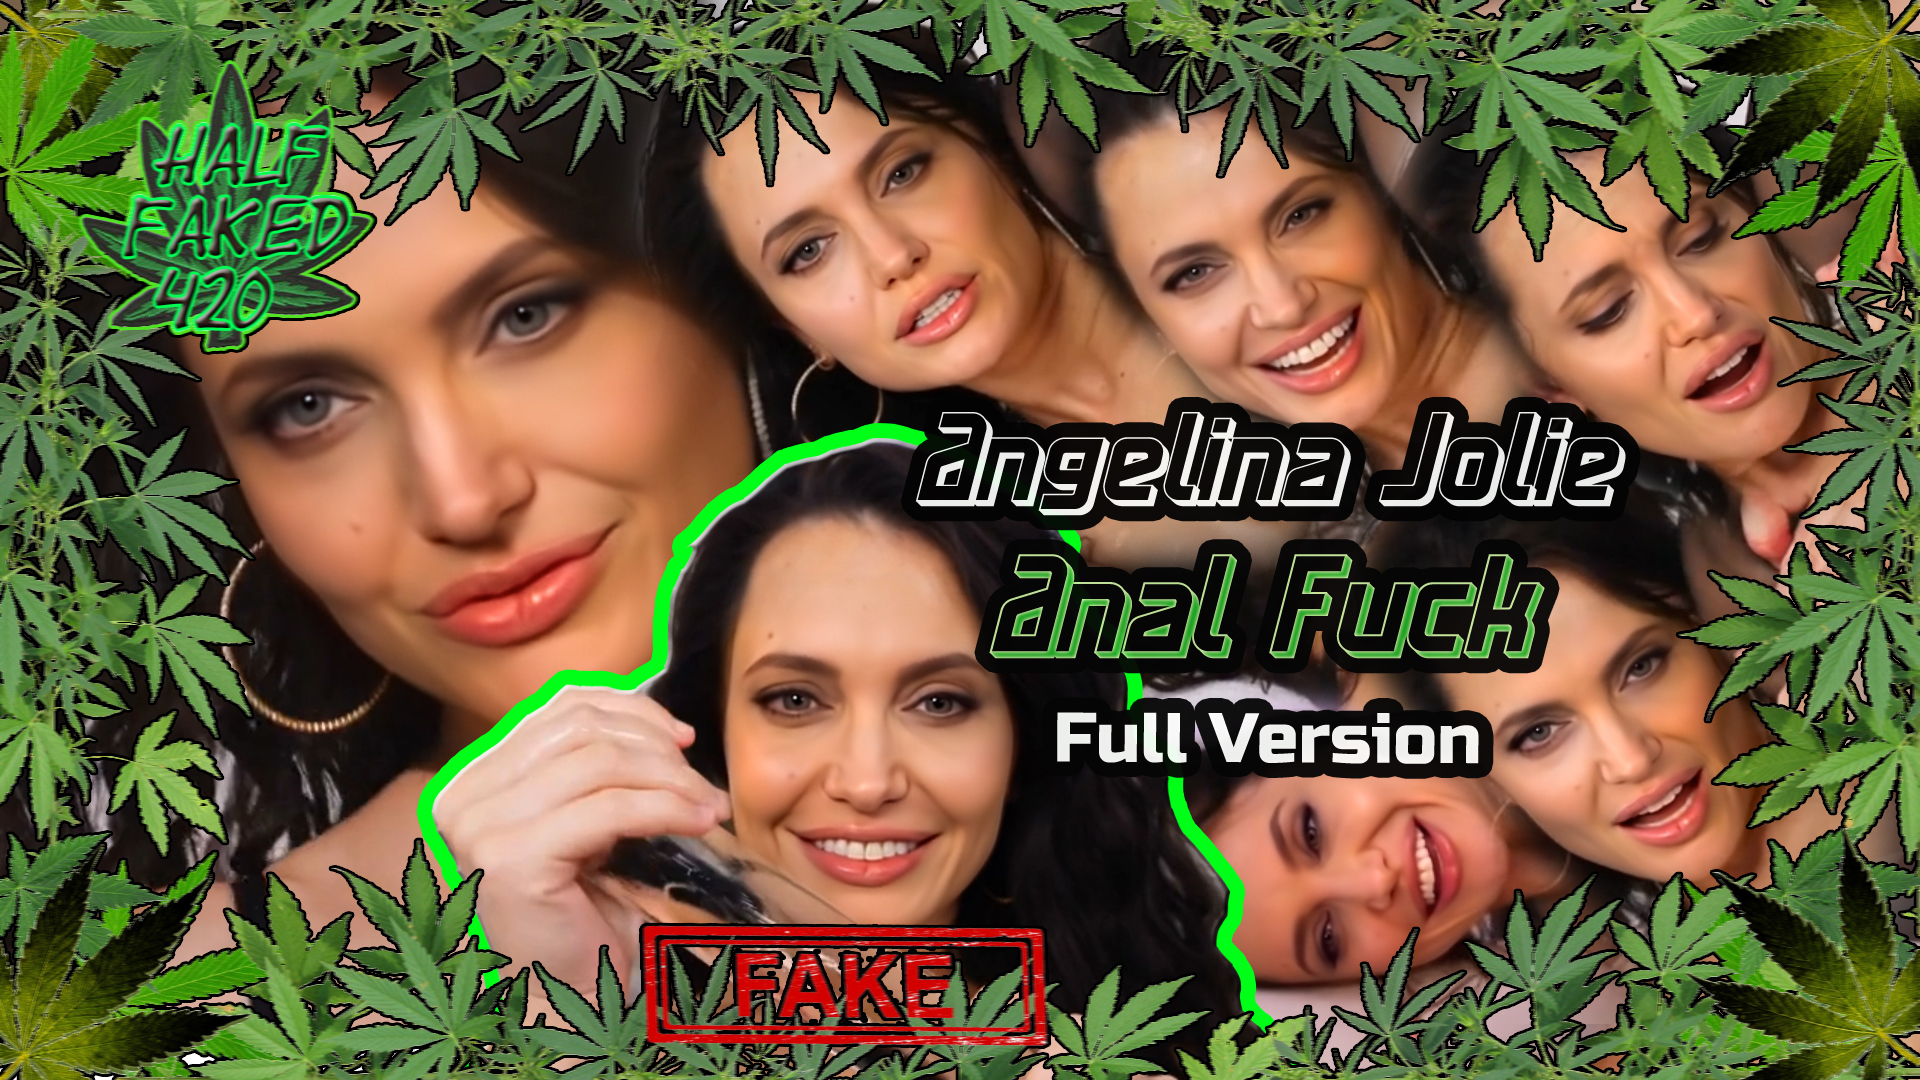 Angelina Jolie - Anal Fuck | FULL VERSION | FAKE